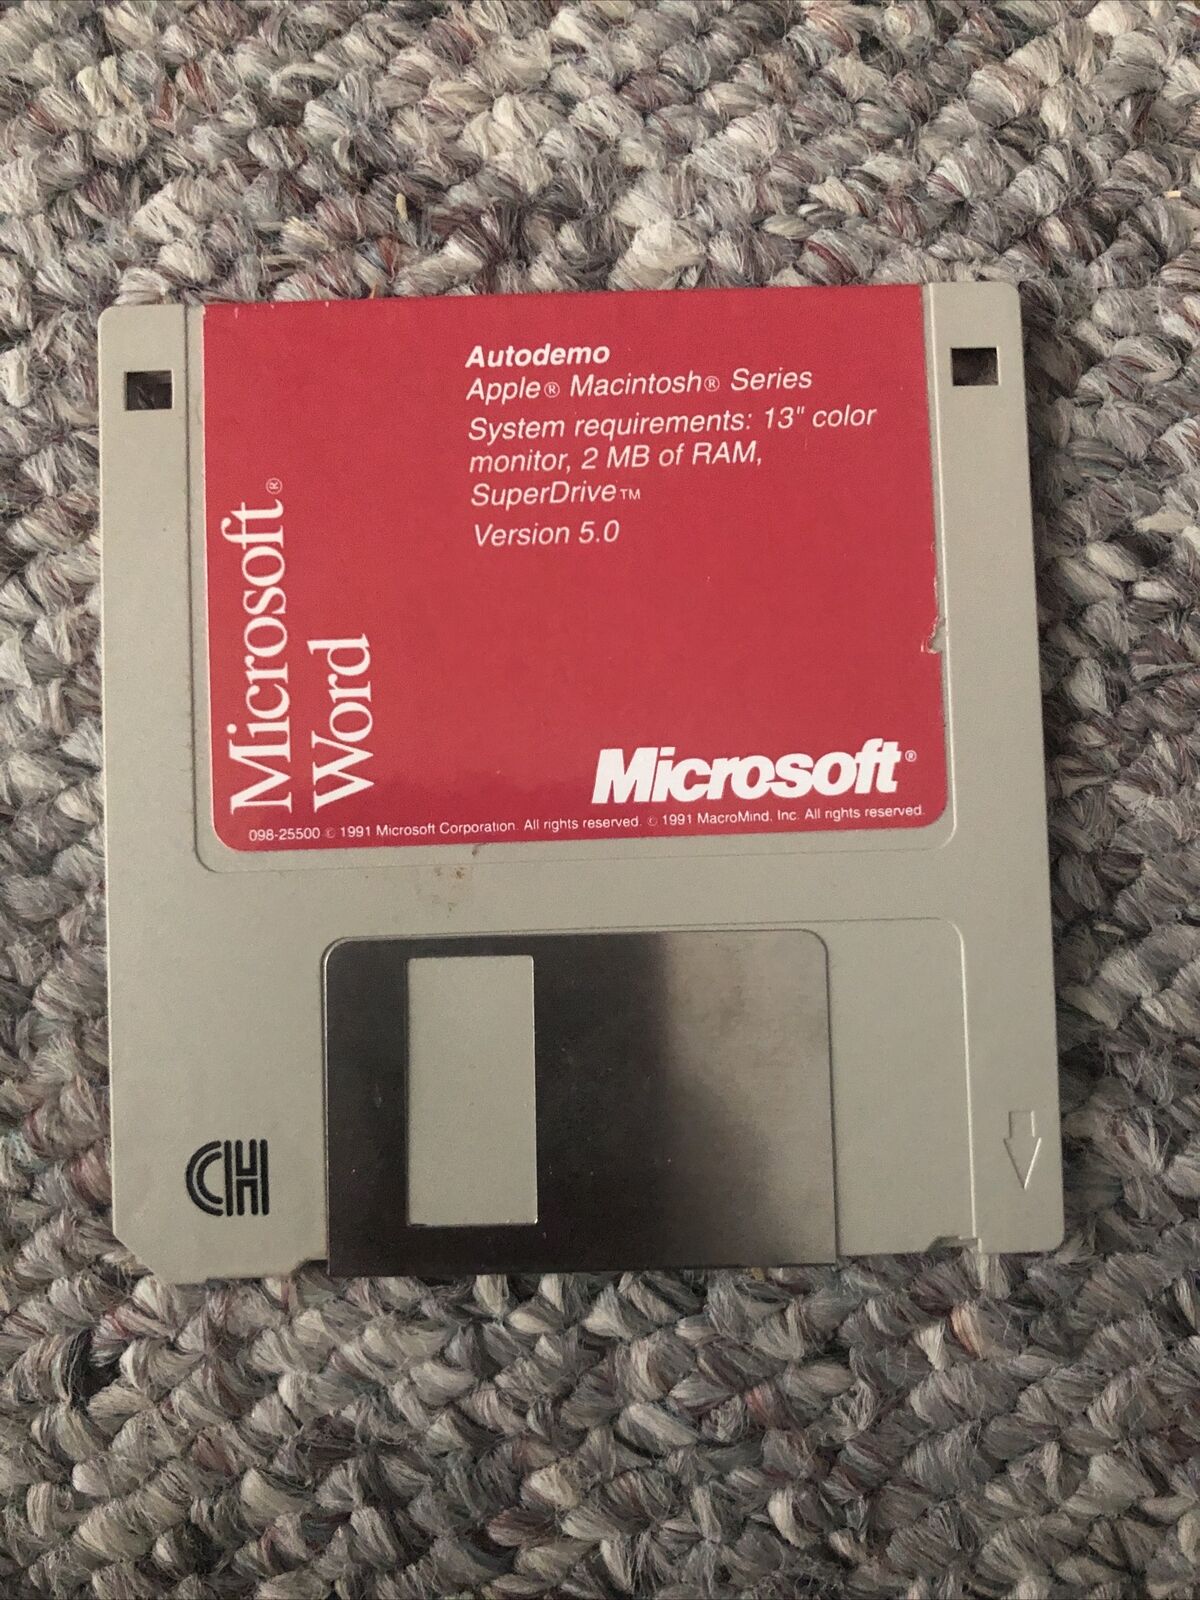 VTG Microsoft Word v 5.0 Auto Demo Apple Macintosh Floppy Disk Rare 3.5” 1991